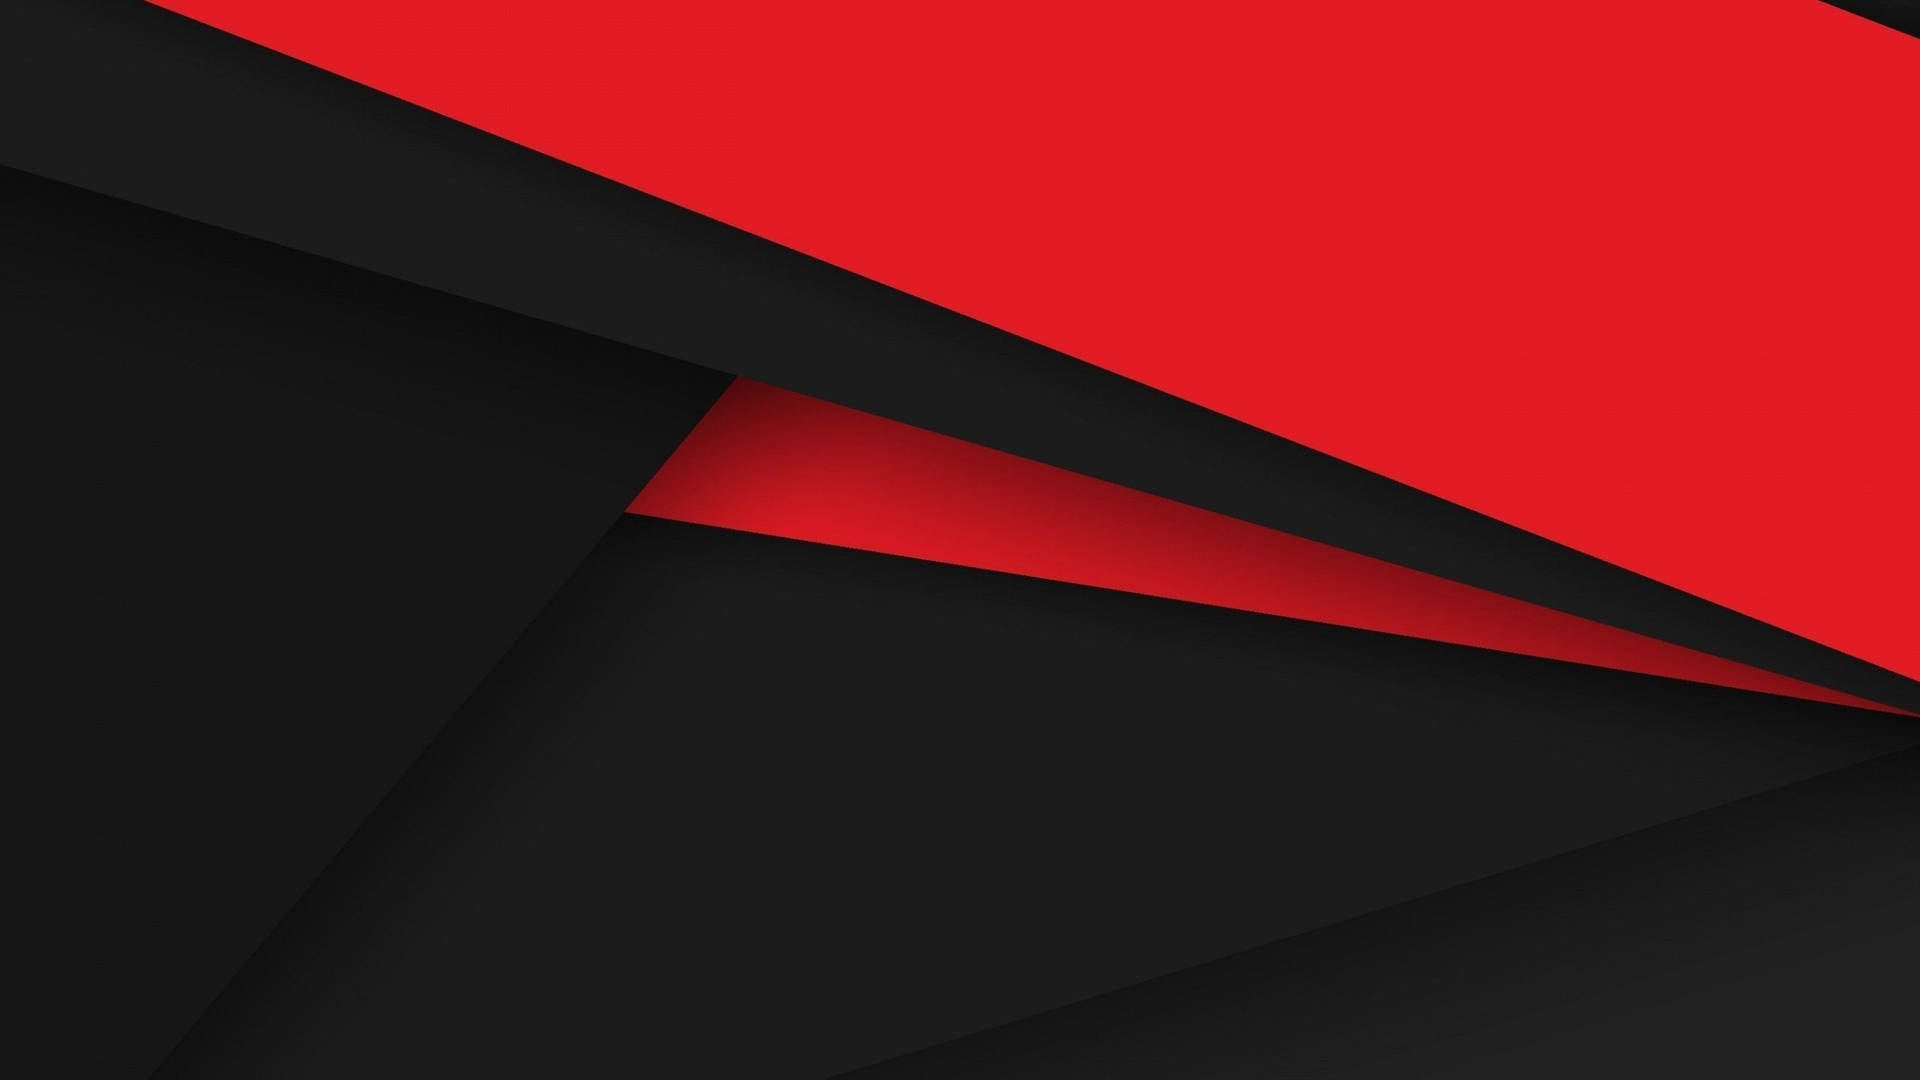 Cool Red And Black Desktop Background